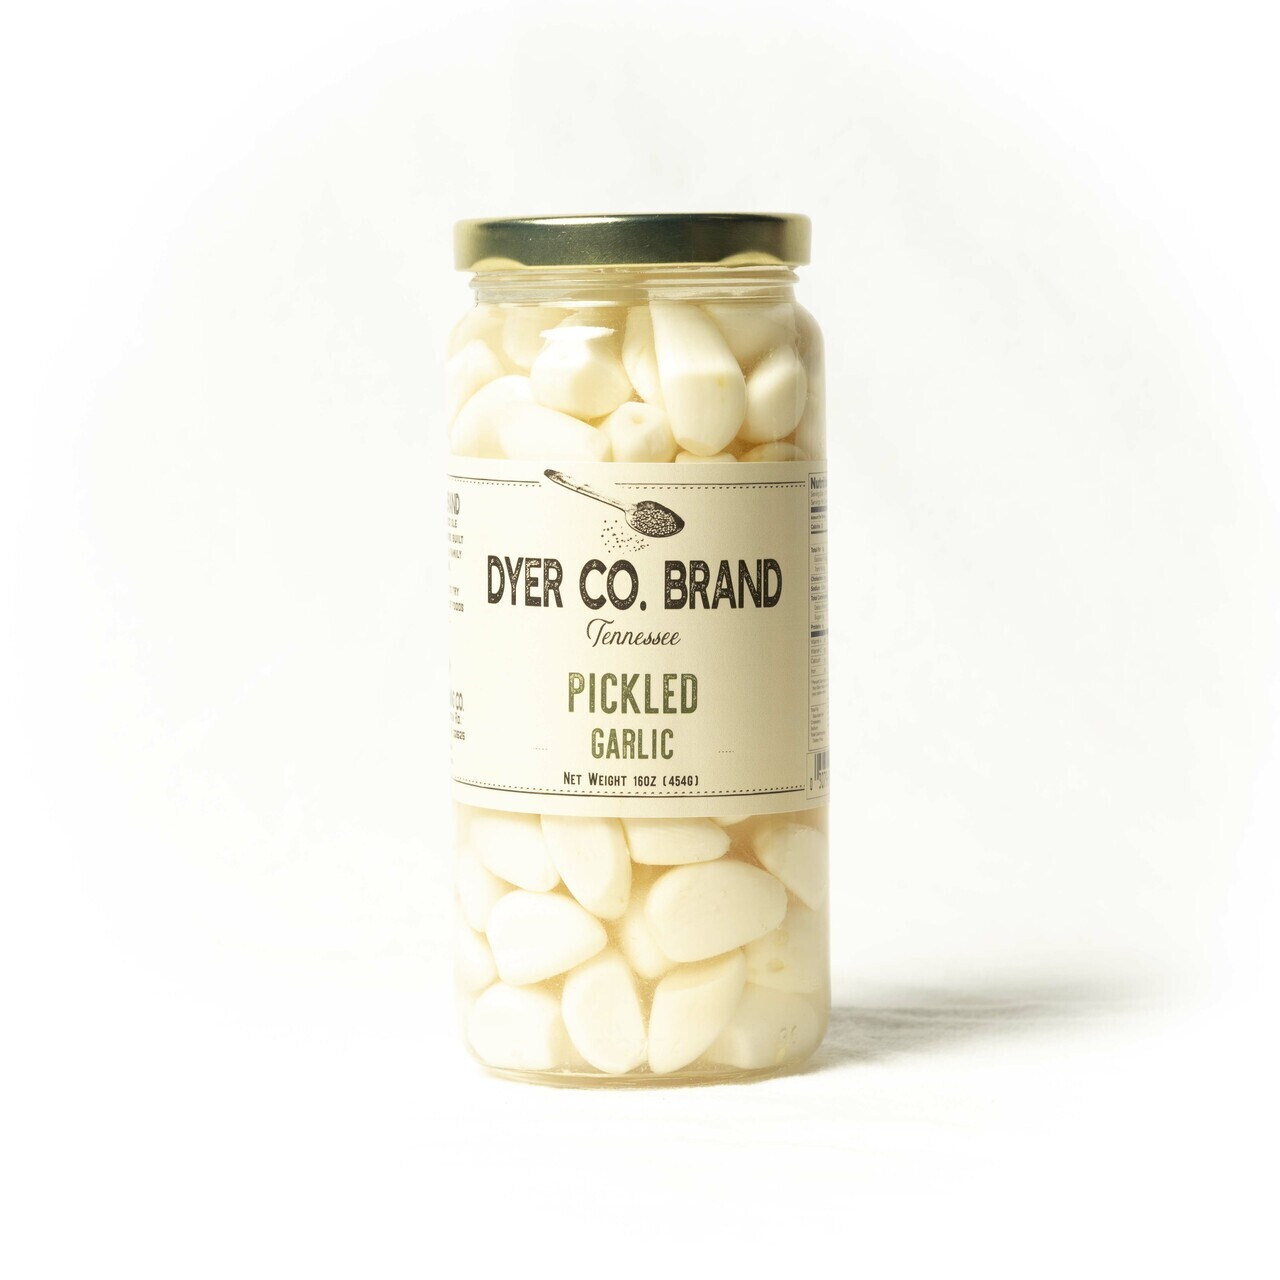 Dyer Co Brand Pickled Garlic